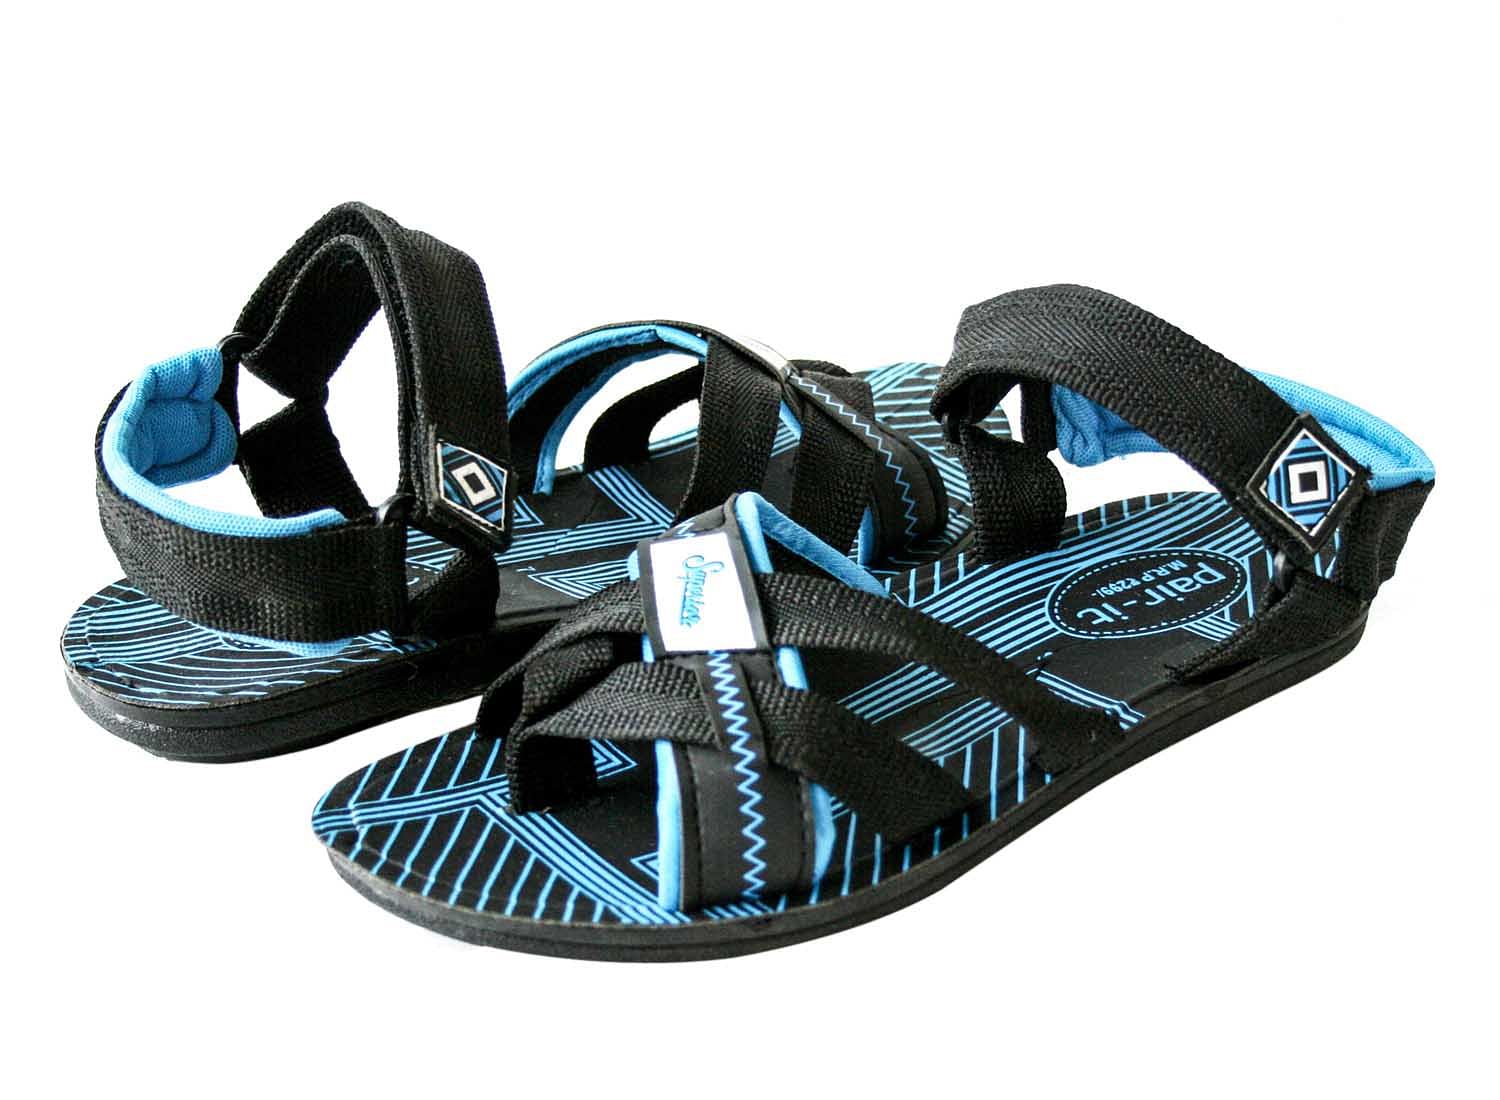 Pair-it Mn Sandals-RE-Gladio106-Black/S. Blue